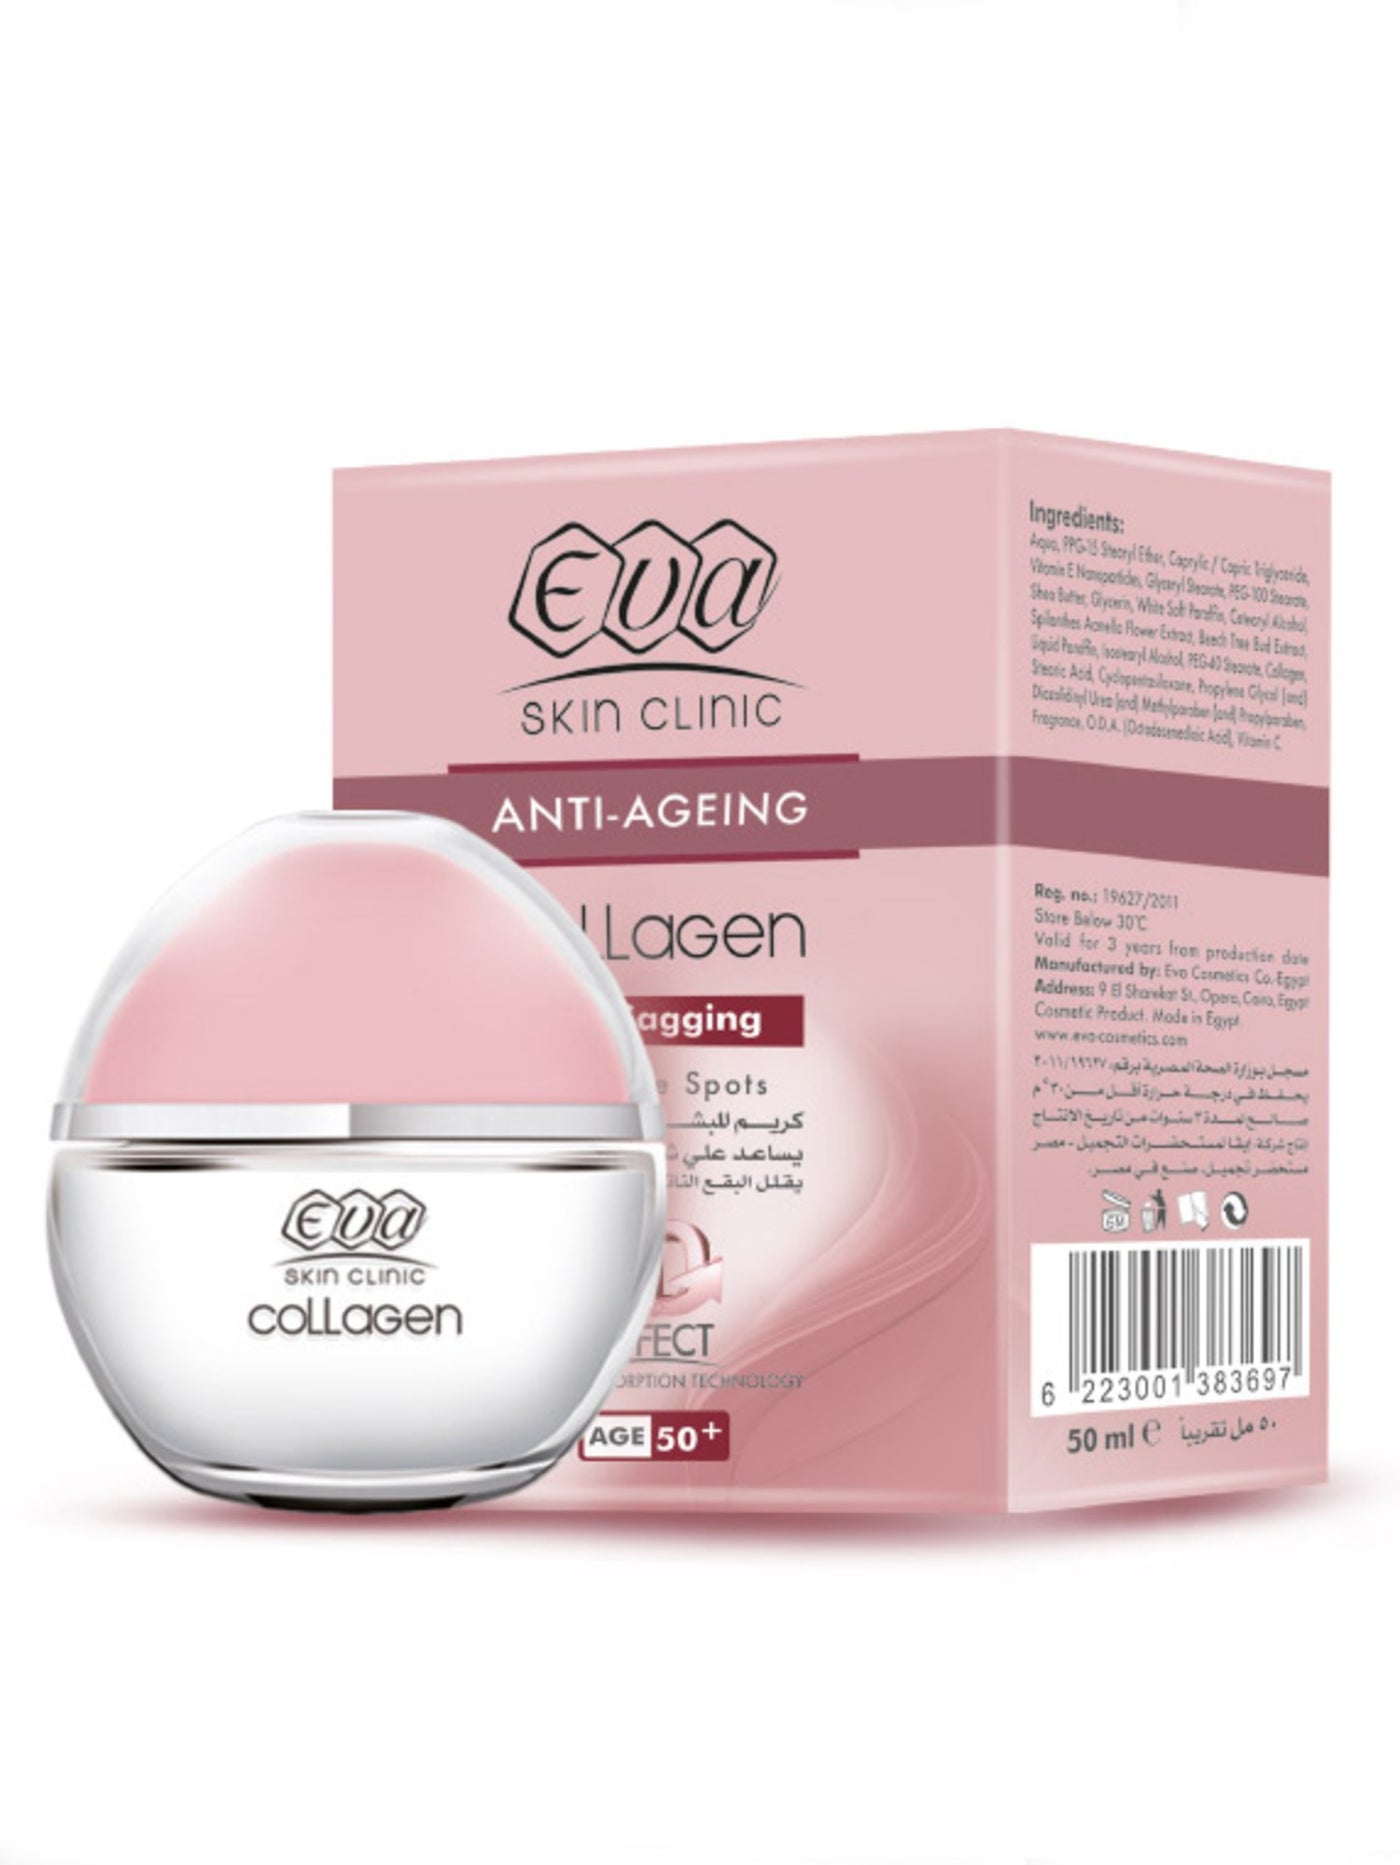 Eva Skin Clinic Collagen Anti-Sagging 50 ml